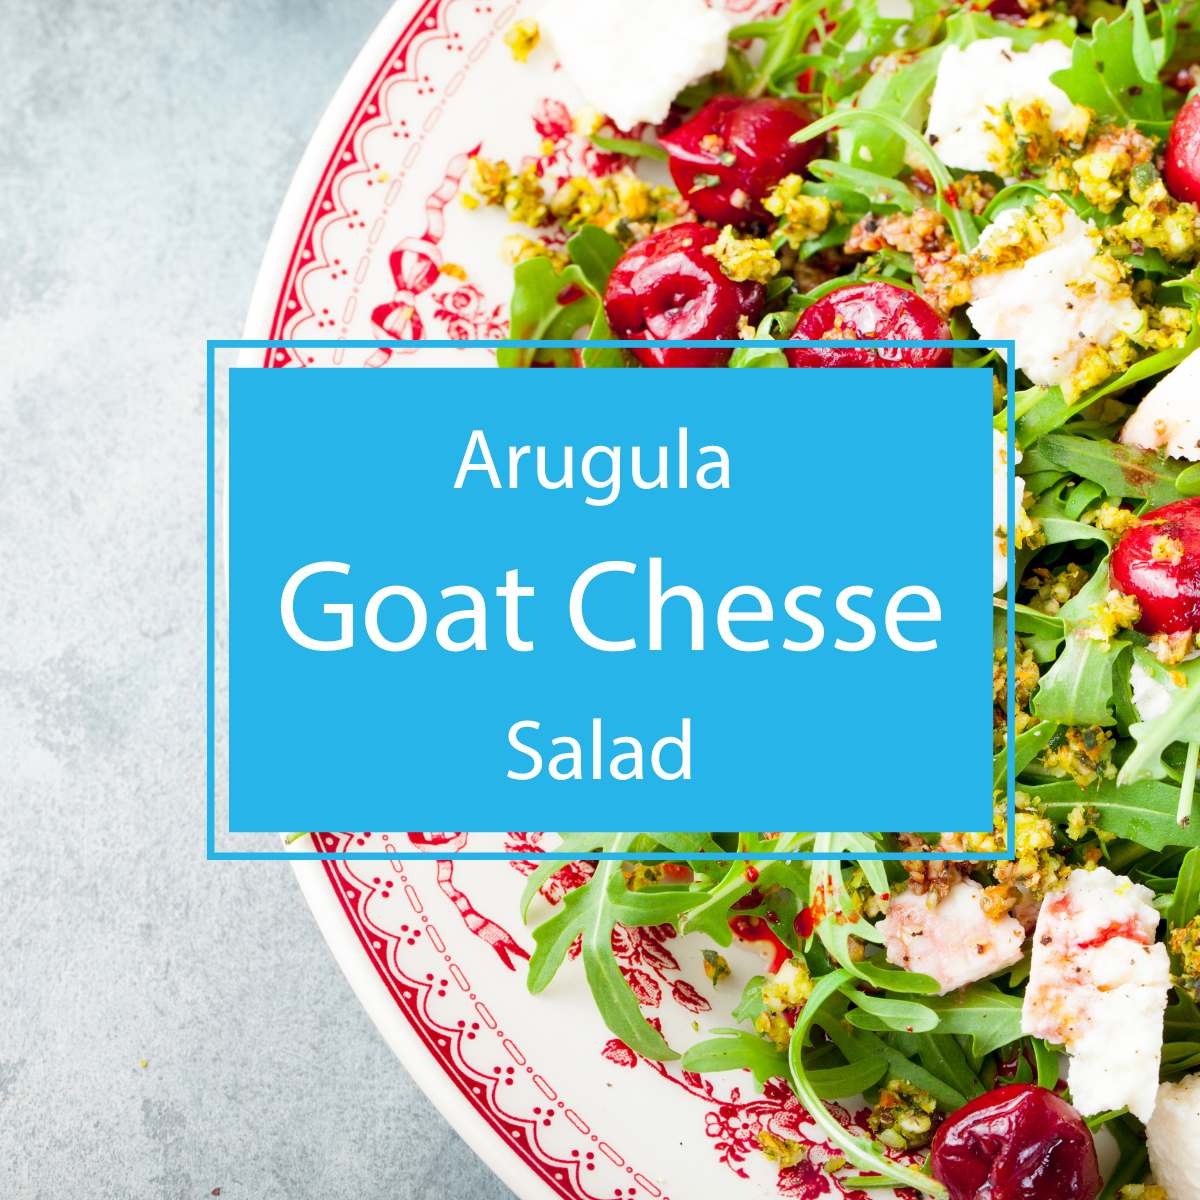 Arugula Goat Cheese Salad